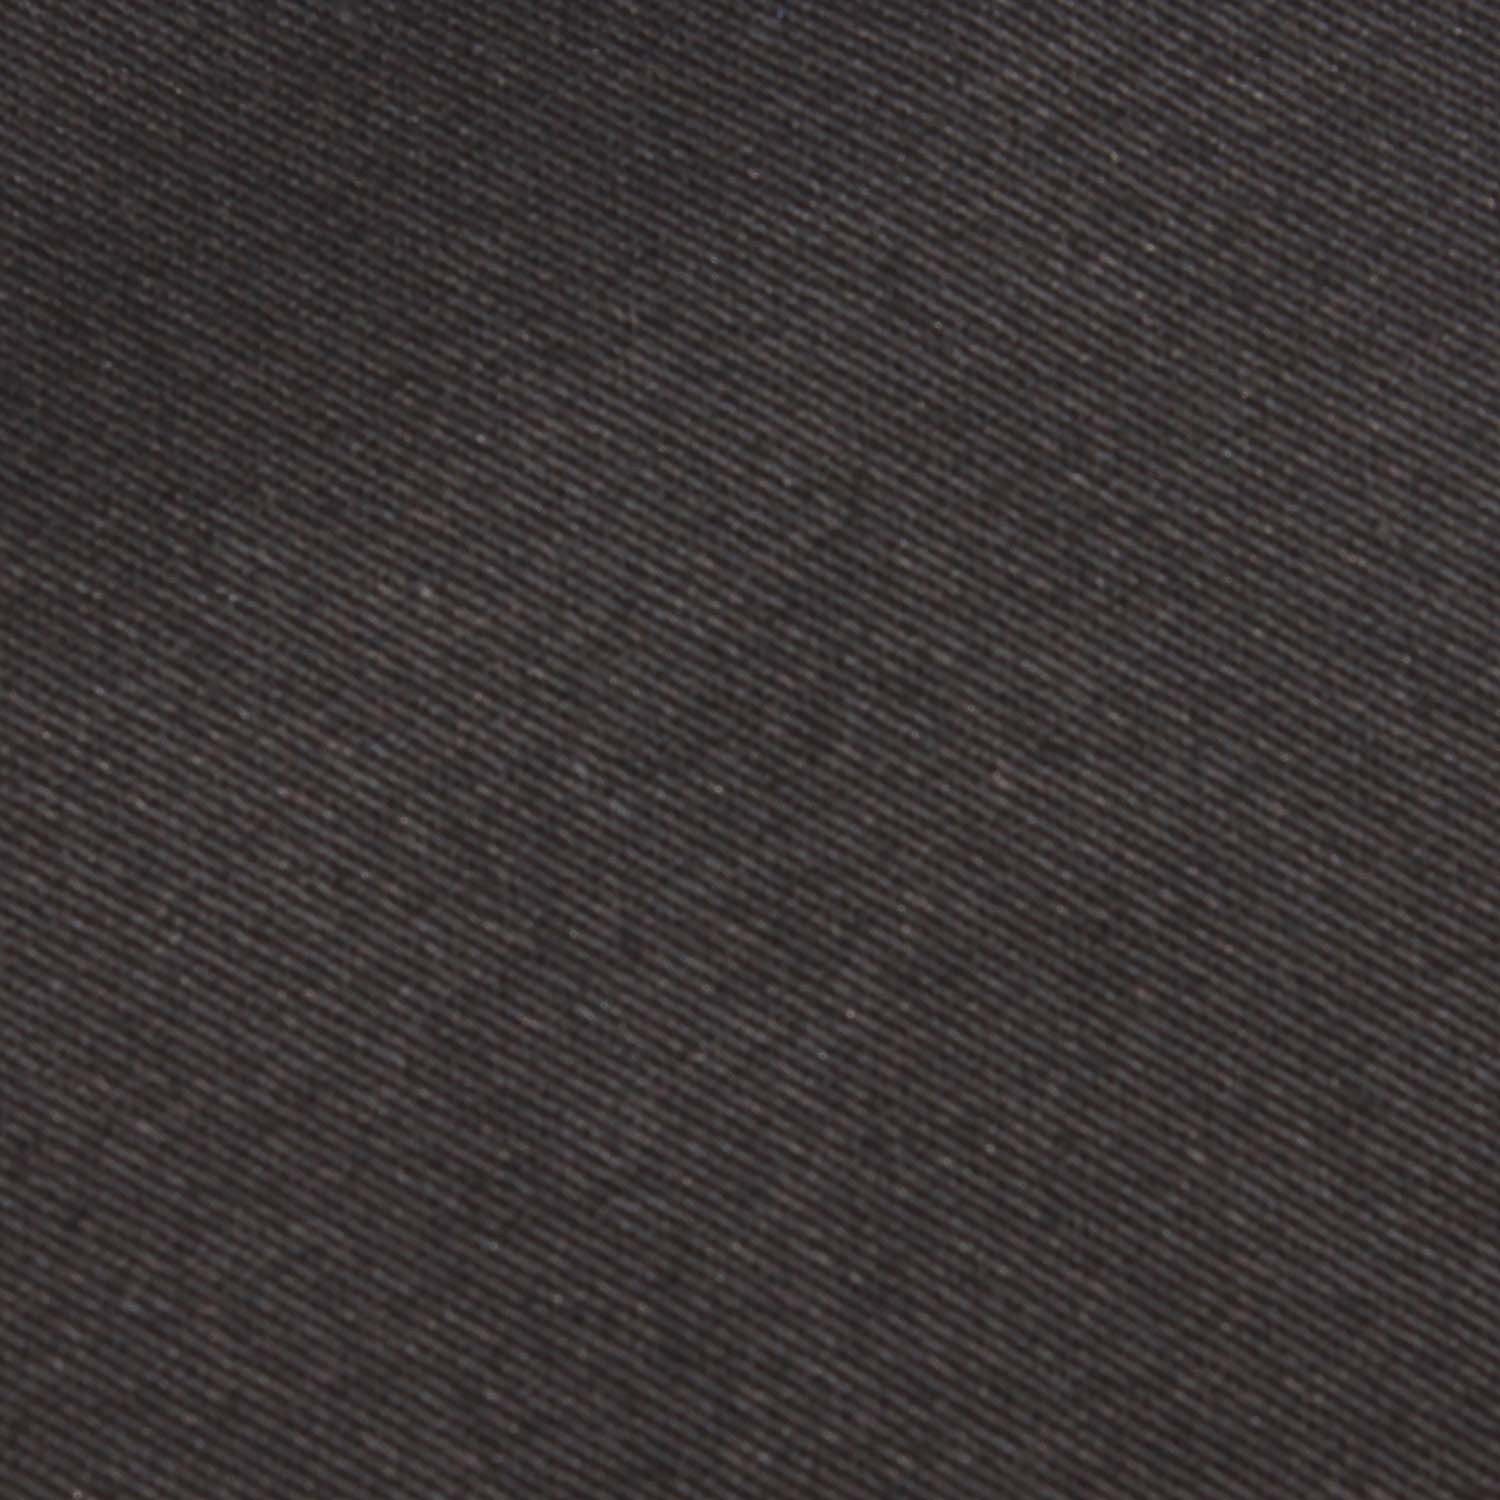 Black Cotton Fabric Pocket Square C012